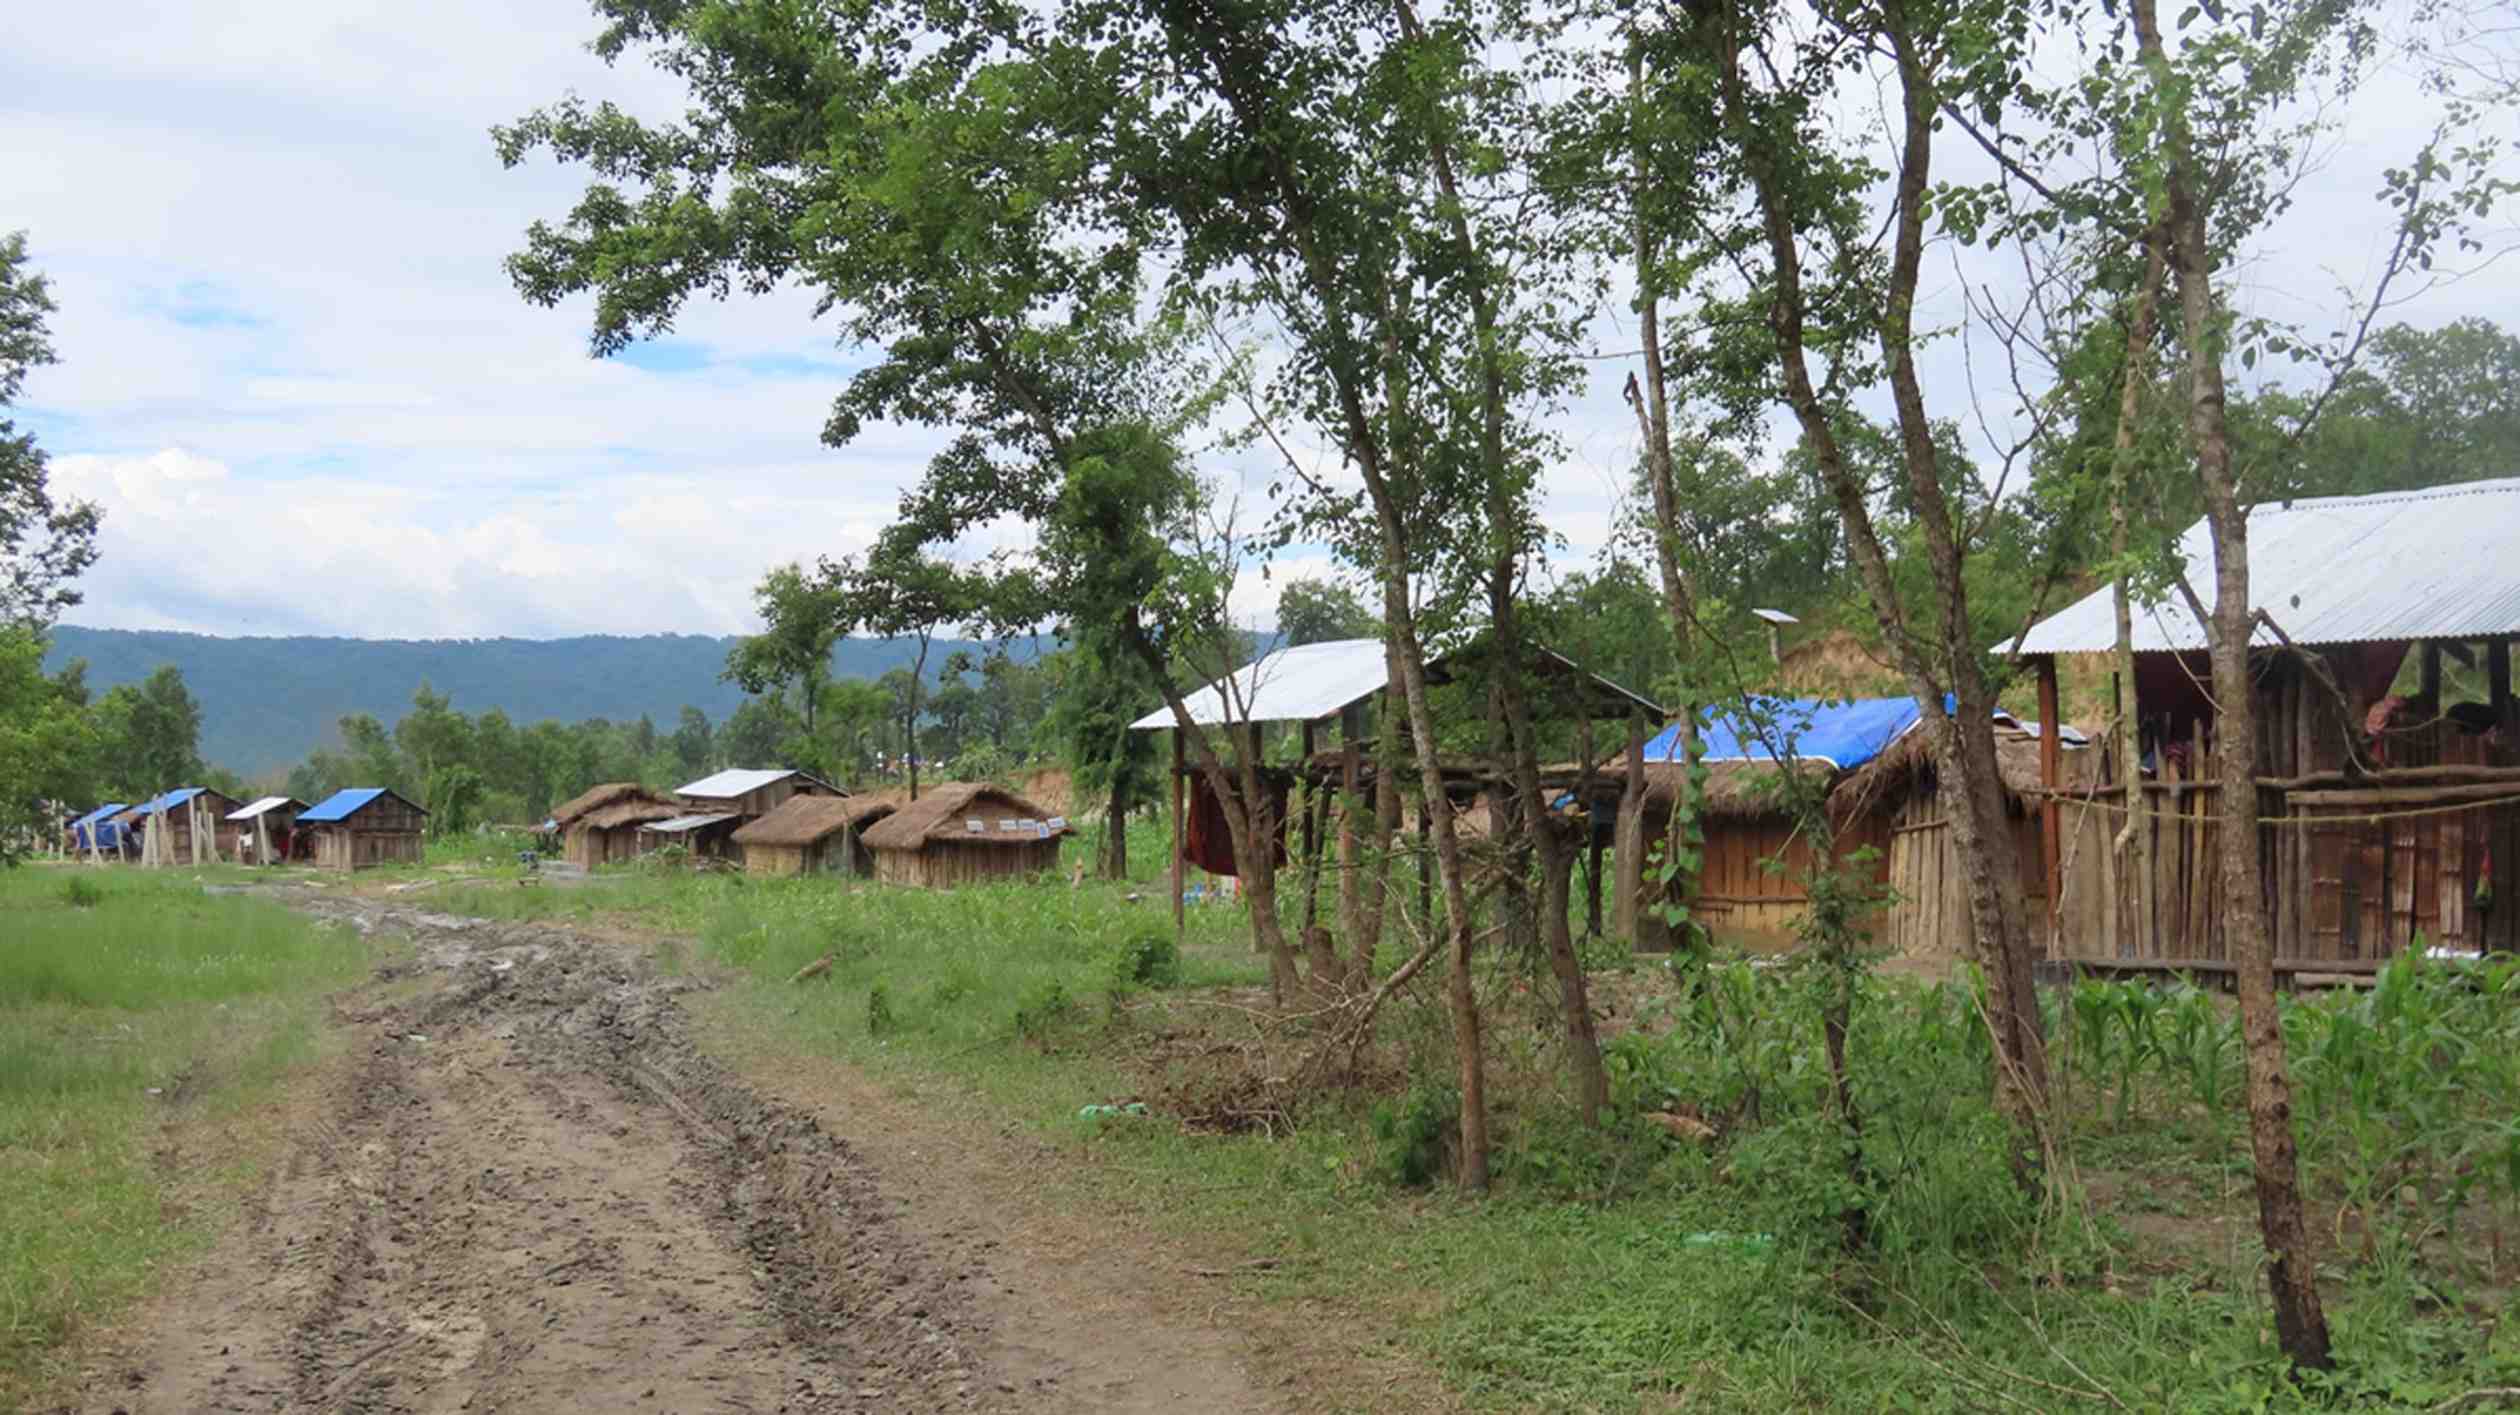 दाताकै भरमा चेपाङ : न रोजगारी छ न खेती गर्ने जमीन